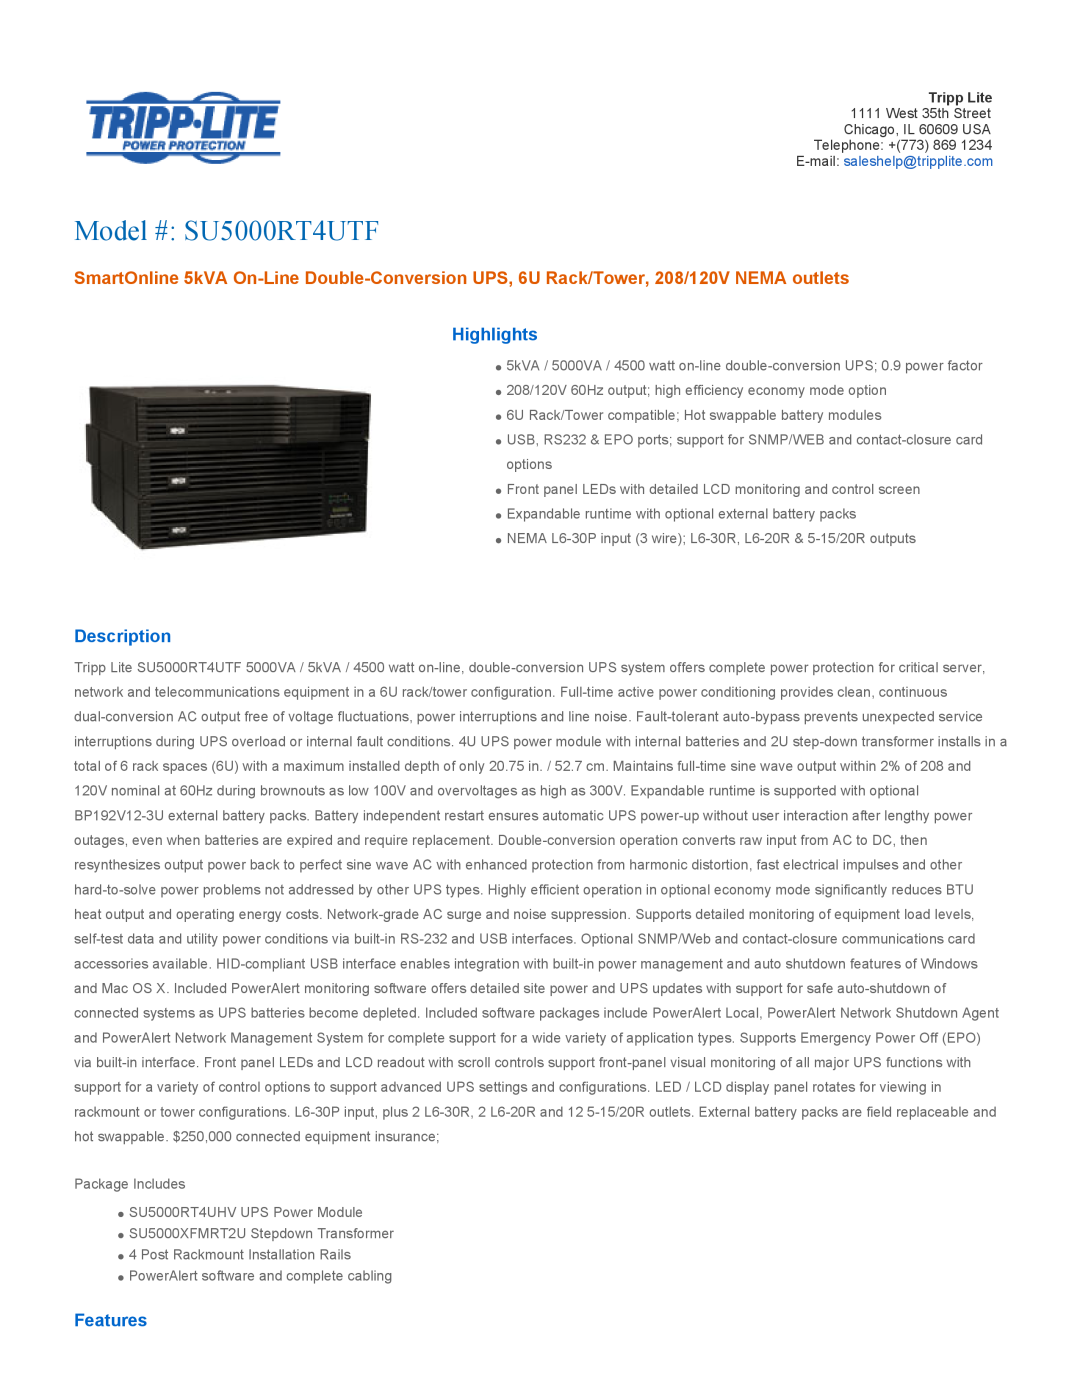 Tripp Lite manual Highlights, Description, Features, Model # SU5000RT4UTF 